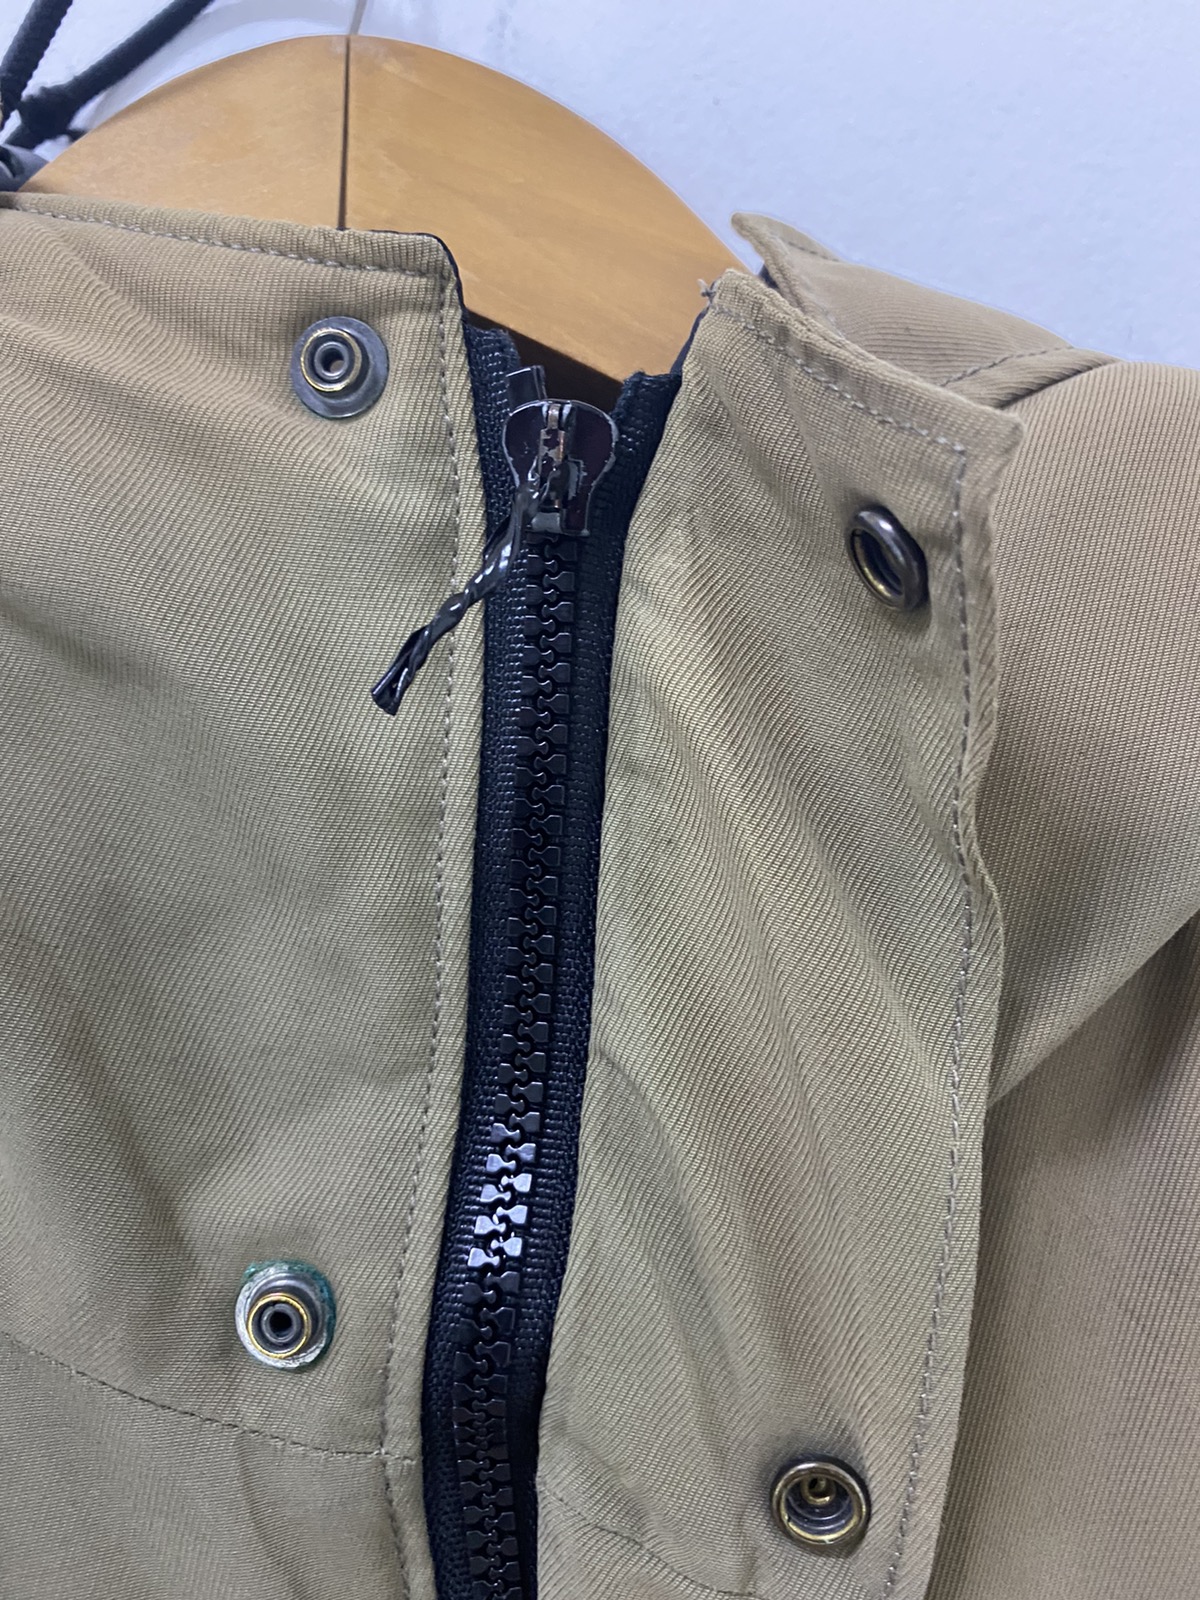 Vintage A/W97 CP Company Parka Jacket Massimo Osti Design - 12